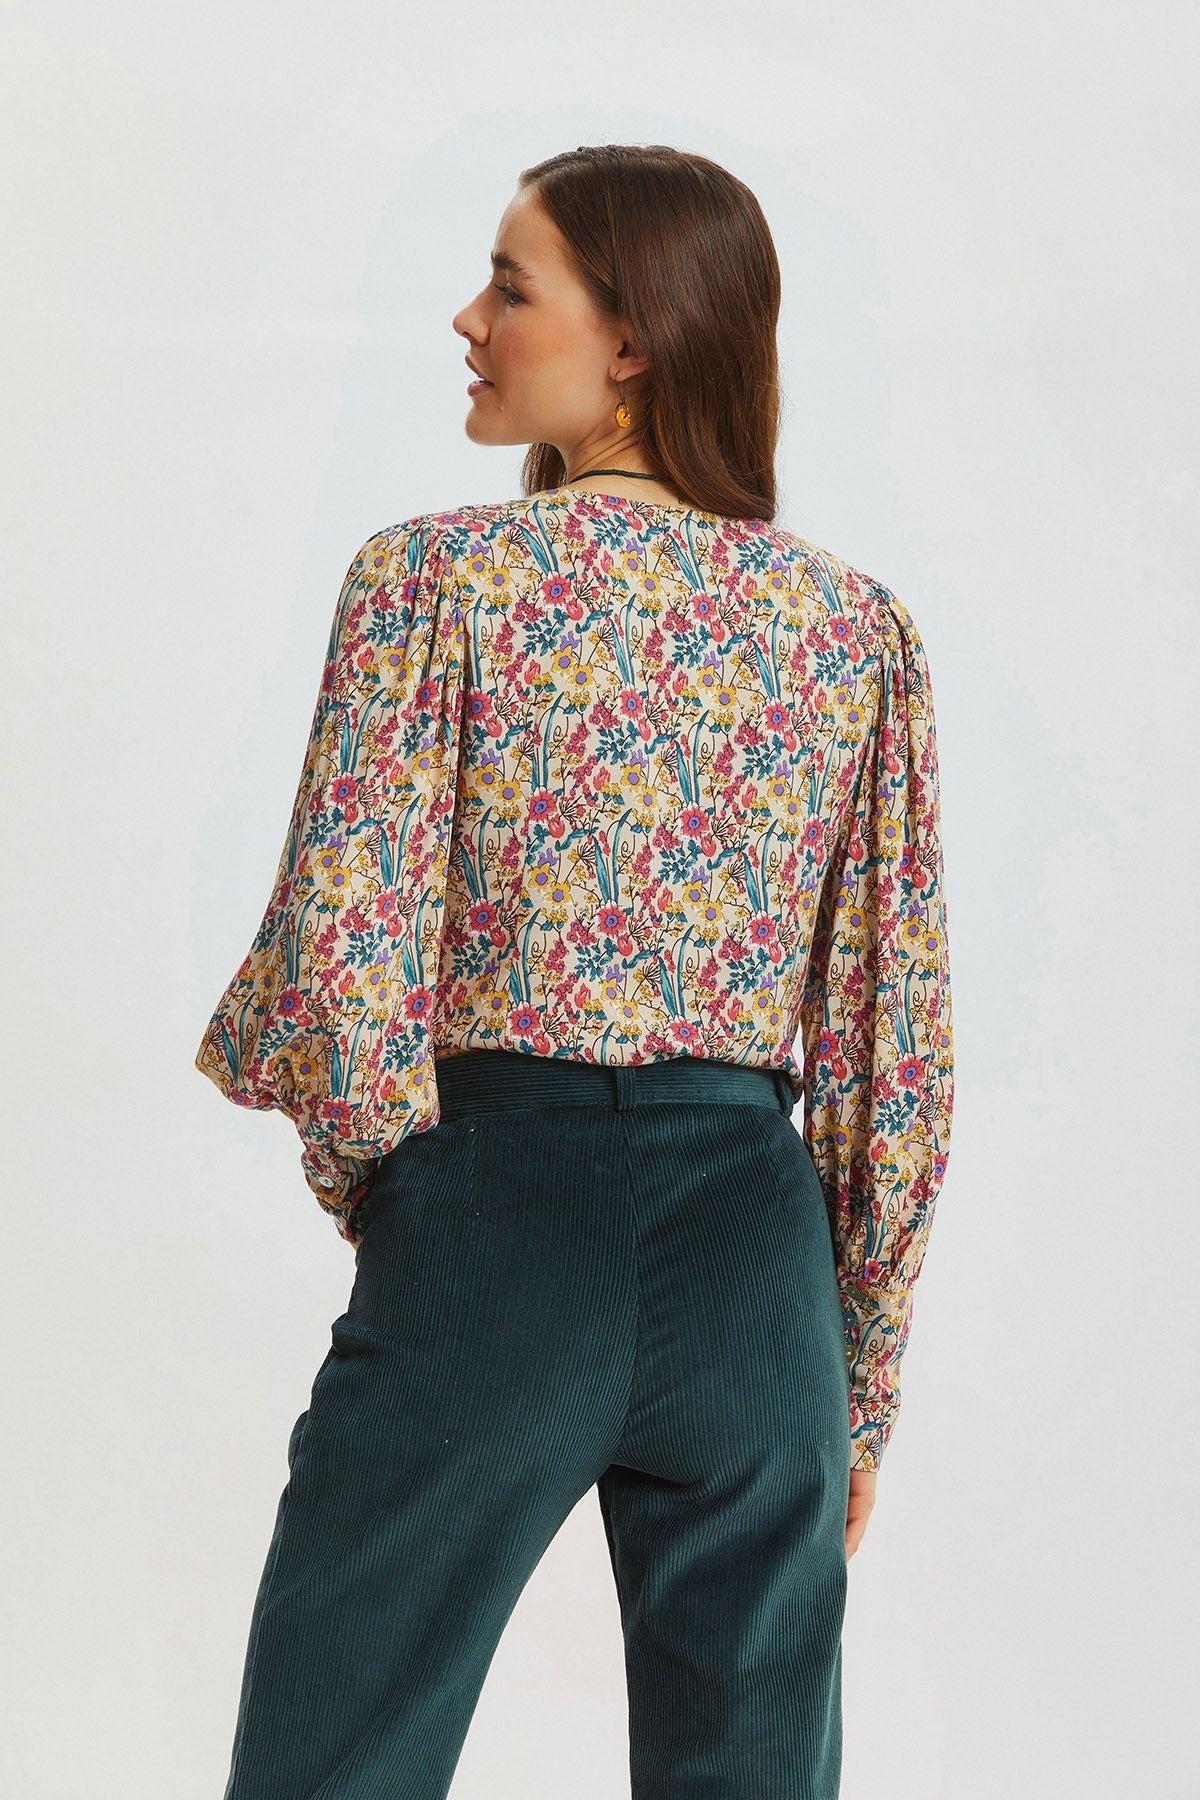 Sleeve Detailed Floral Retro Women's Shirt Beige